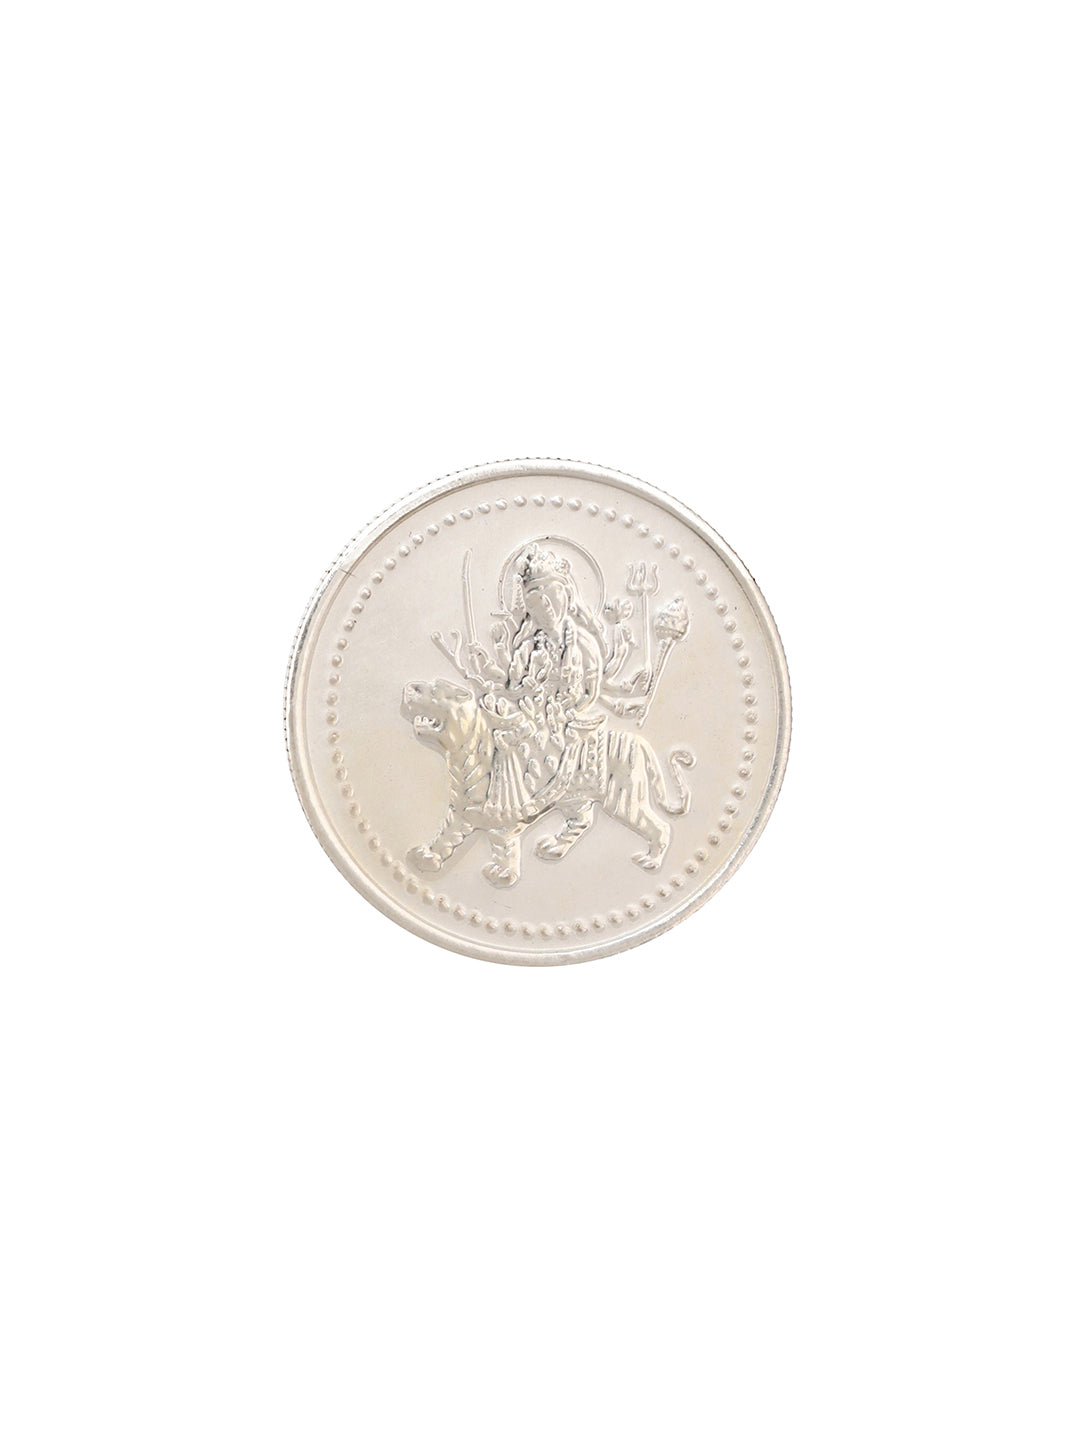 Maa sherawali 10 gram 999 Round Silver Coin